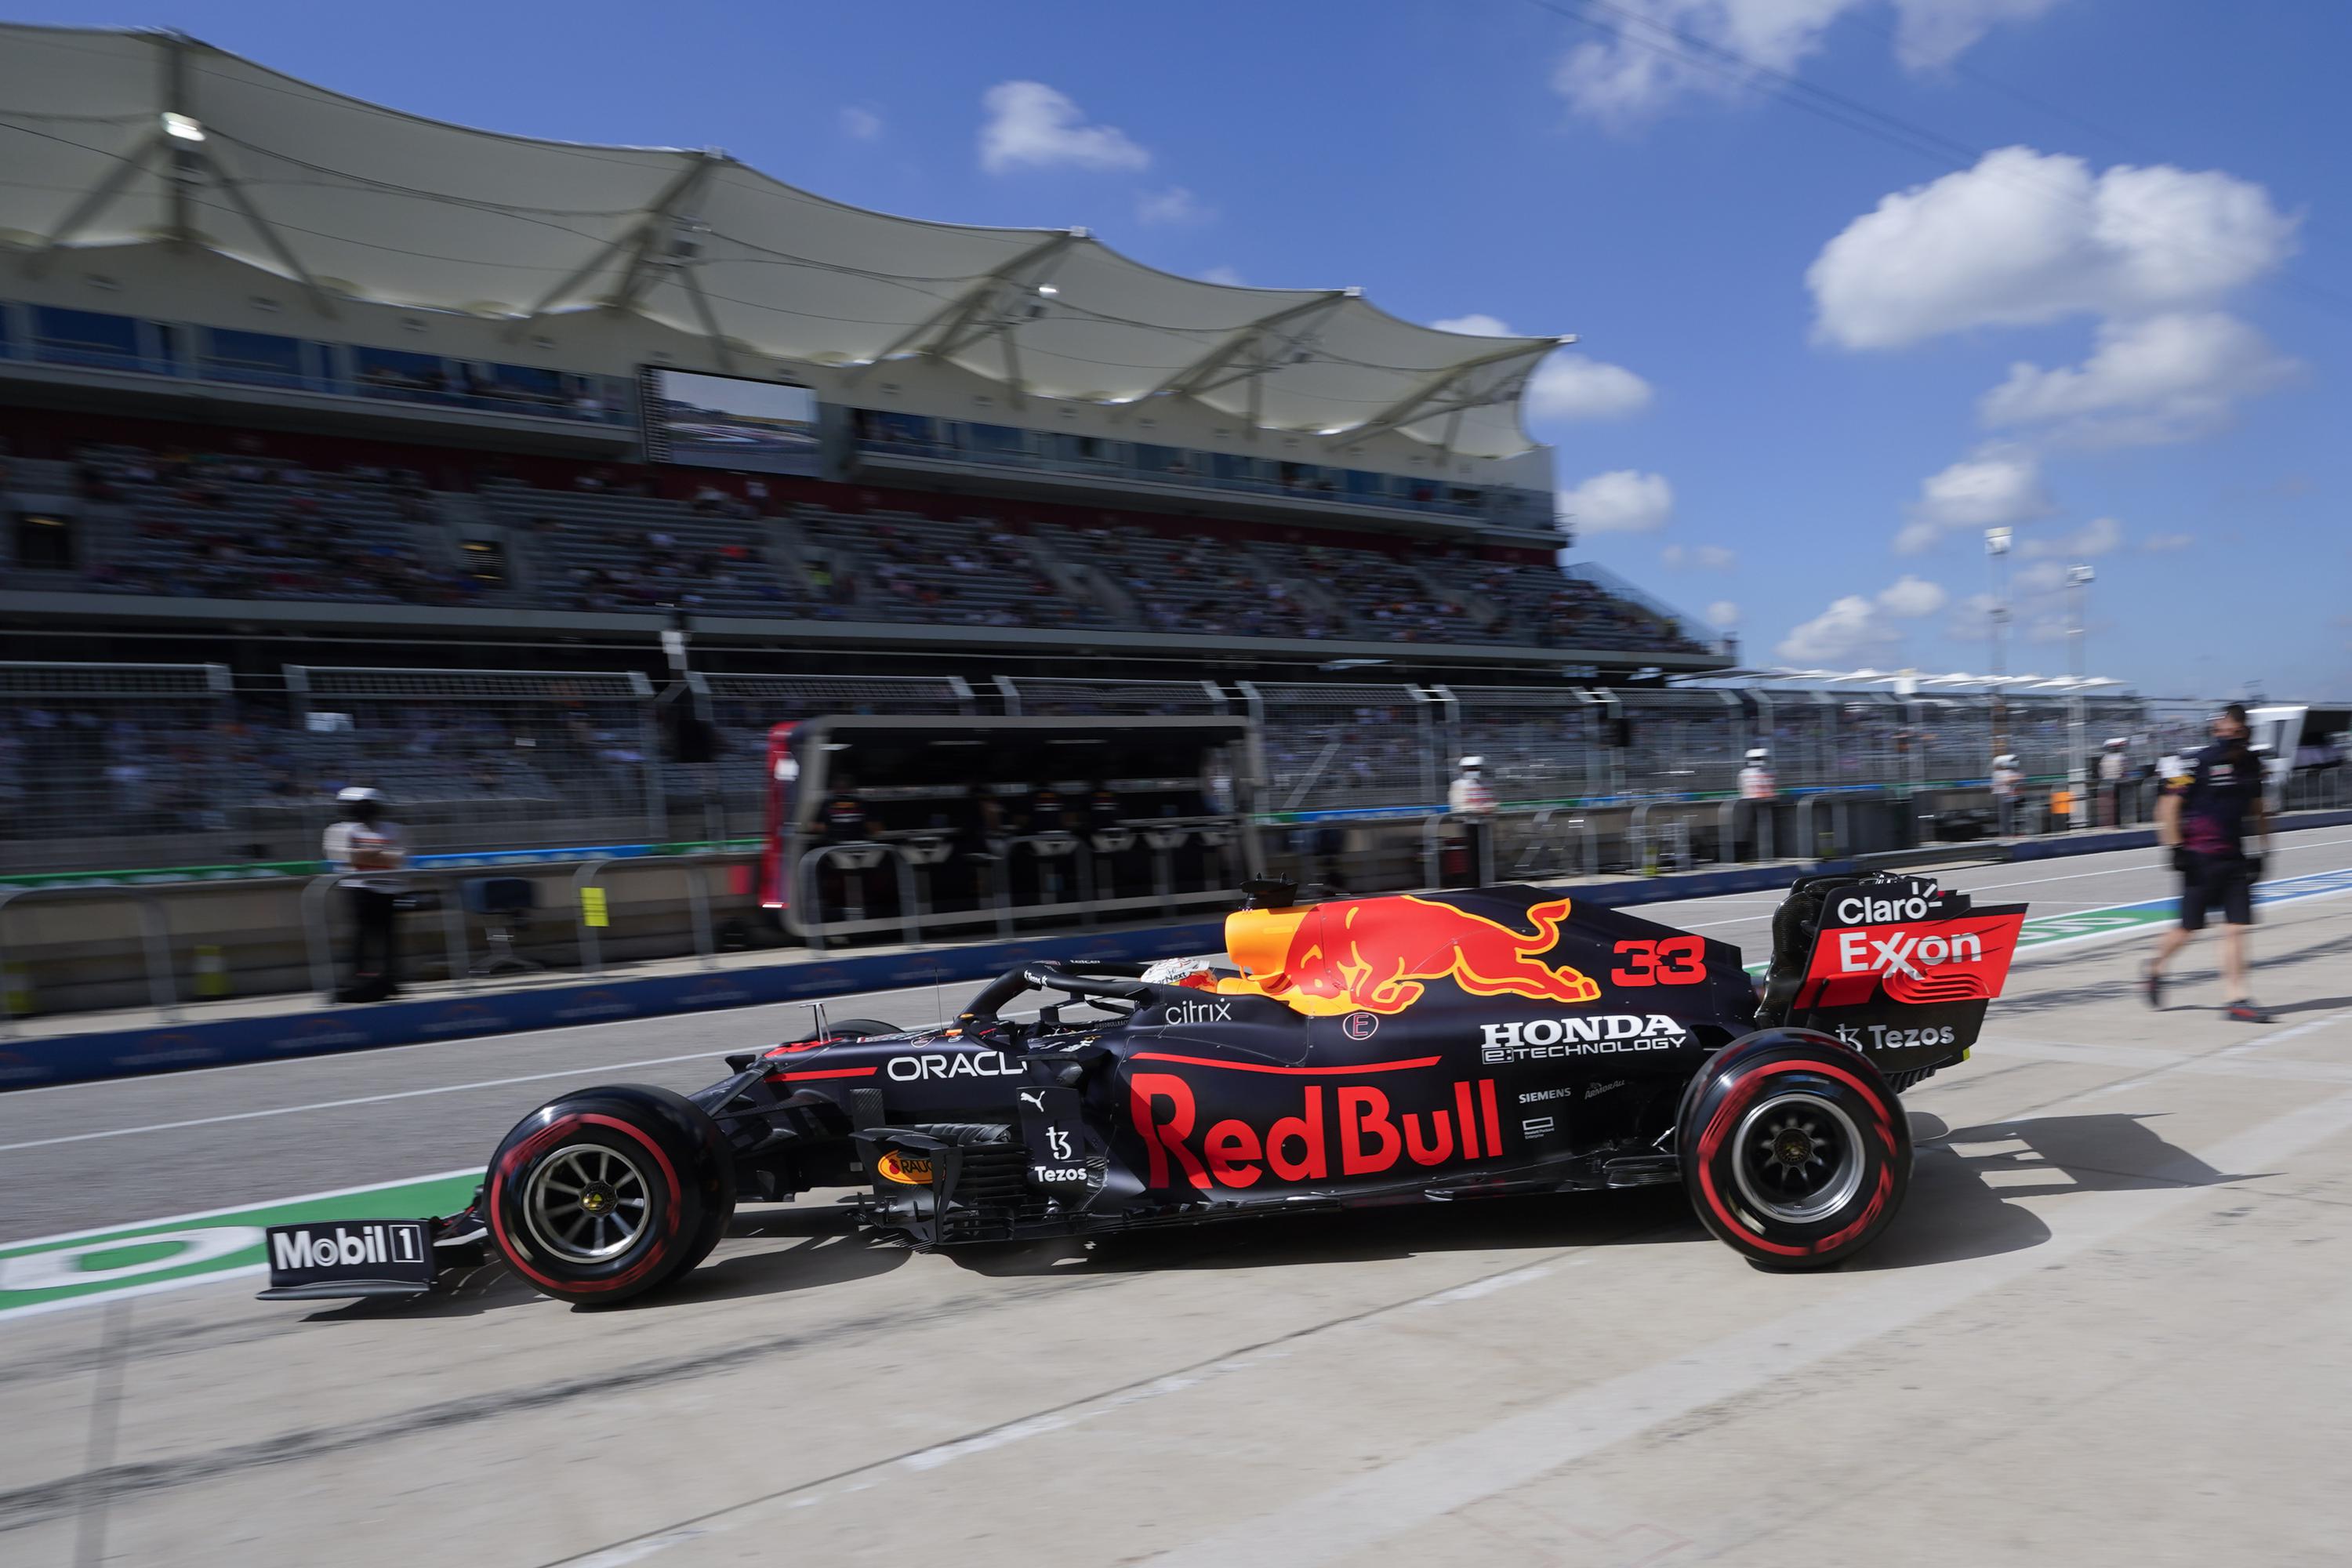 HamiltonVerstappen Formula 1 duel hits the track in Texas AP News